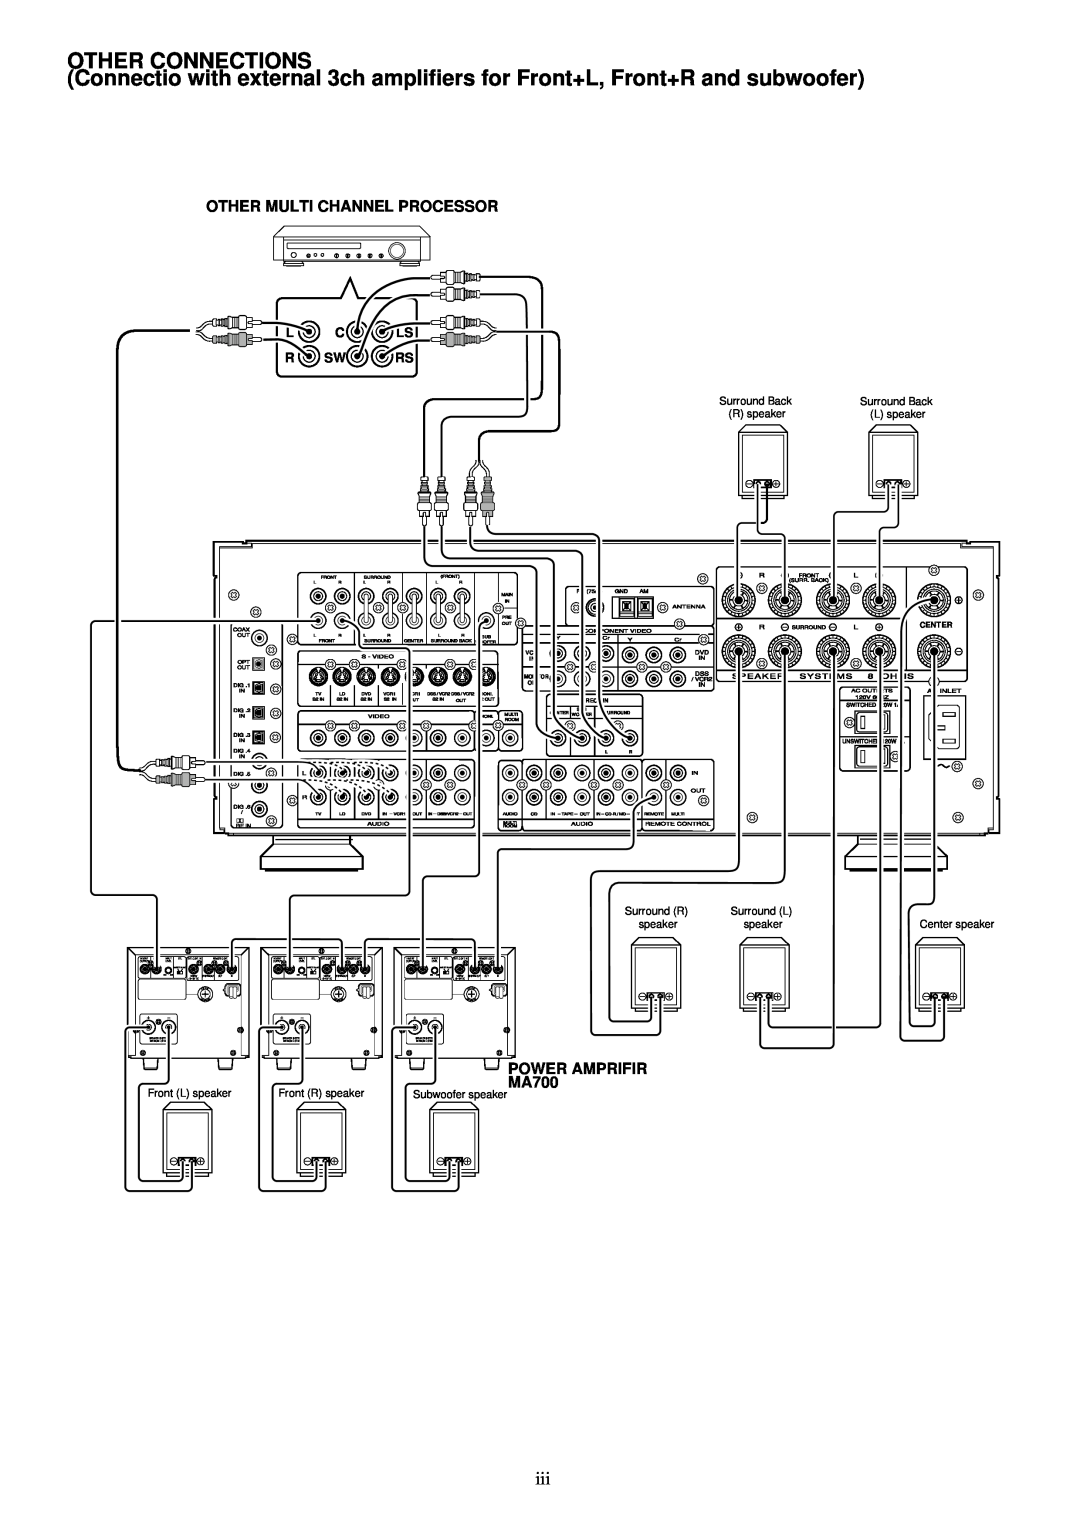 Marantz SR-14EX manual Other Connections, Other Multi Channel Processor, POWER AMPRIFIR MA700, L Cls R Swrs 